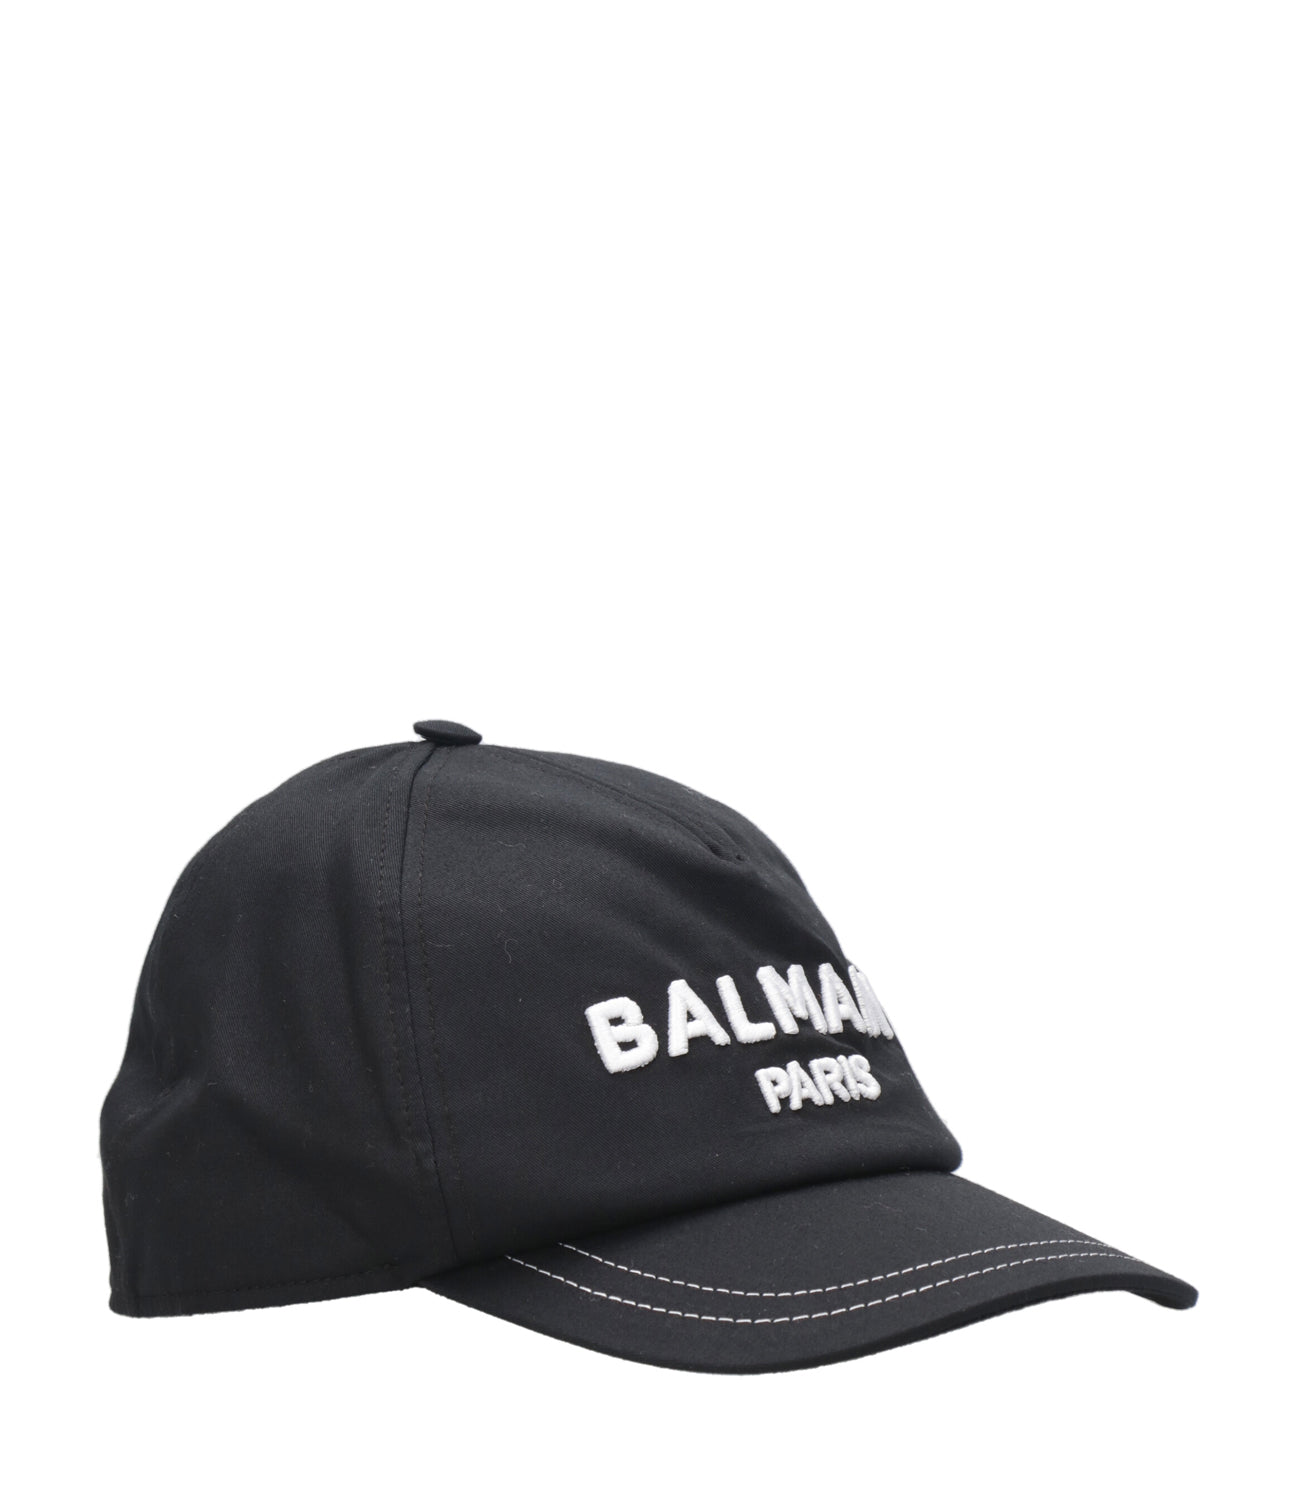 Balmain Kids | Black and White Hat